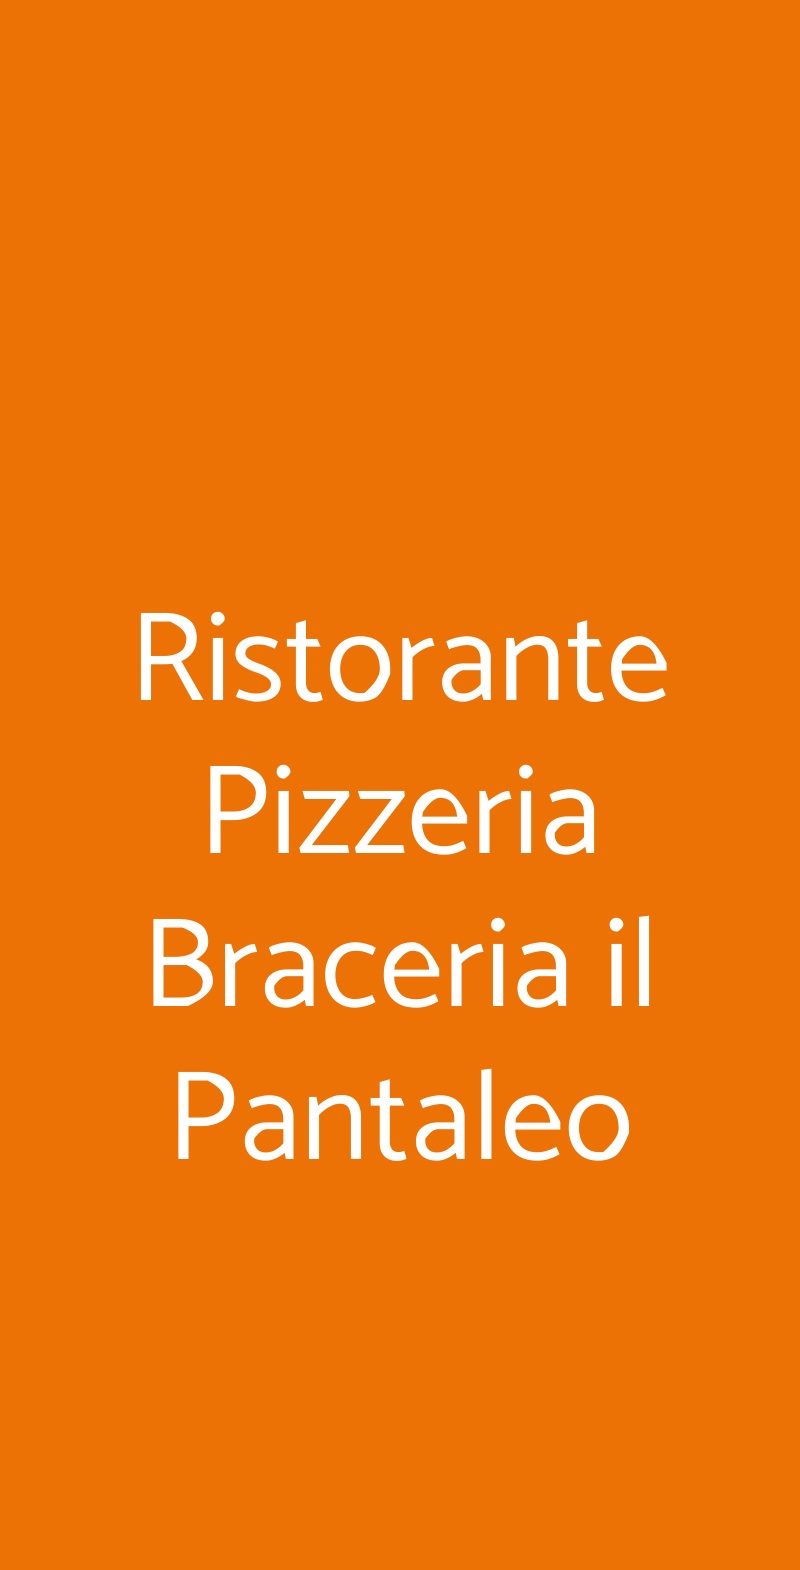 Ristorante Pizzeria Braceria il Pantaleo Quarto menù 1 pagina